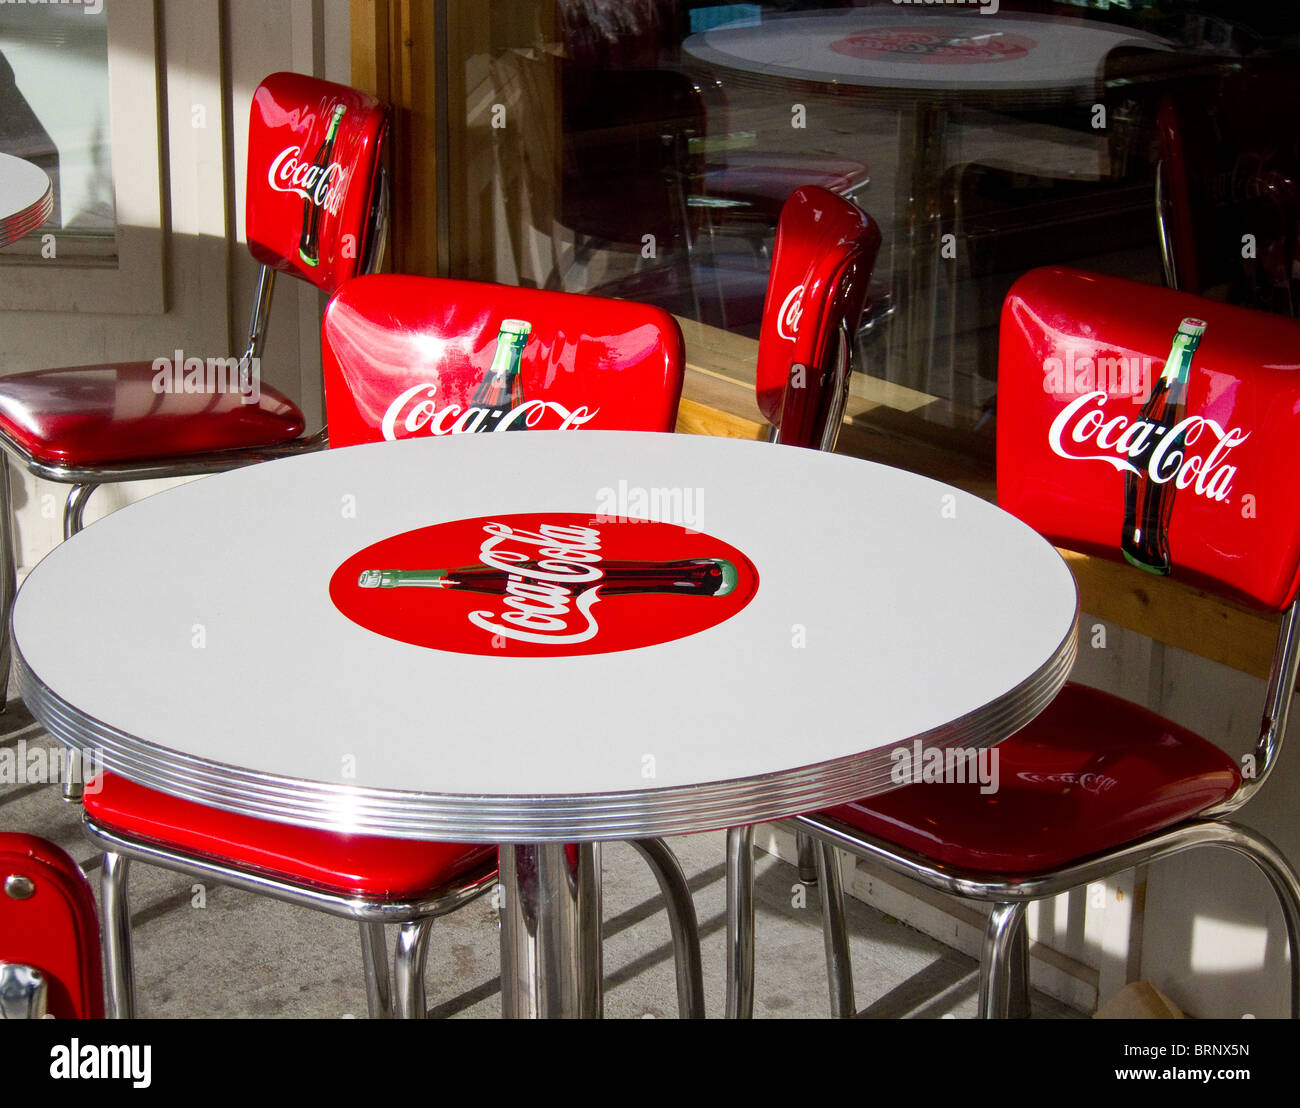 Red coca cola chairs around a white coca cola table Stock Photo - Alamy